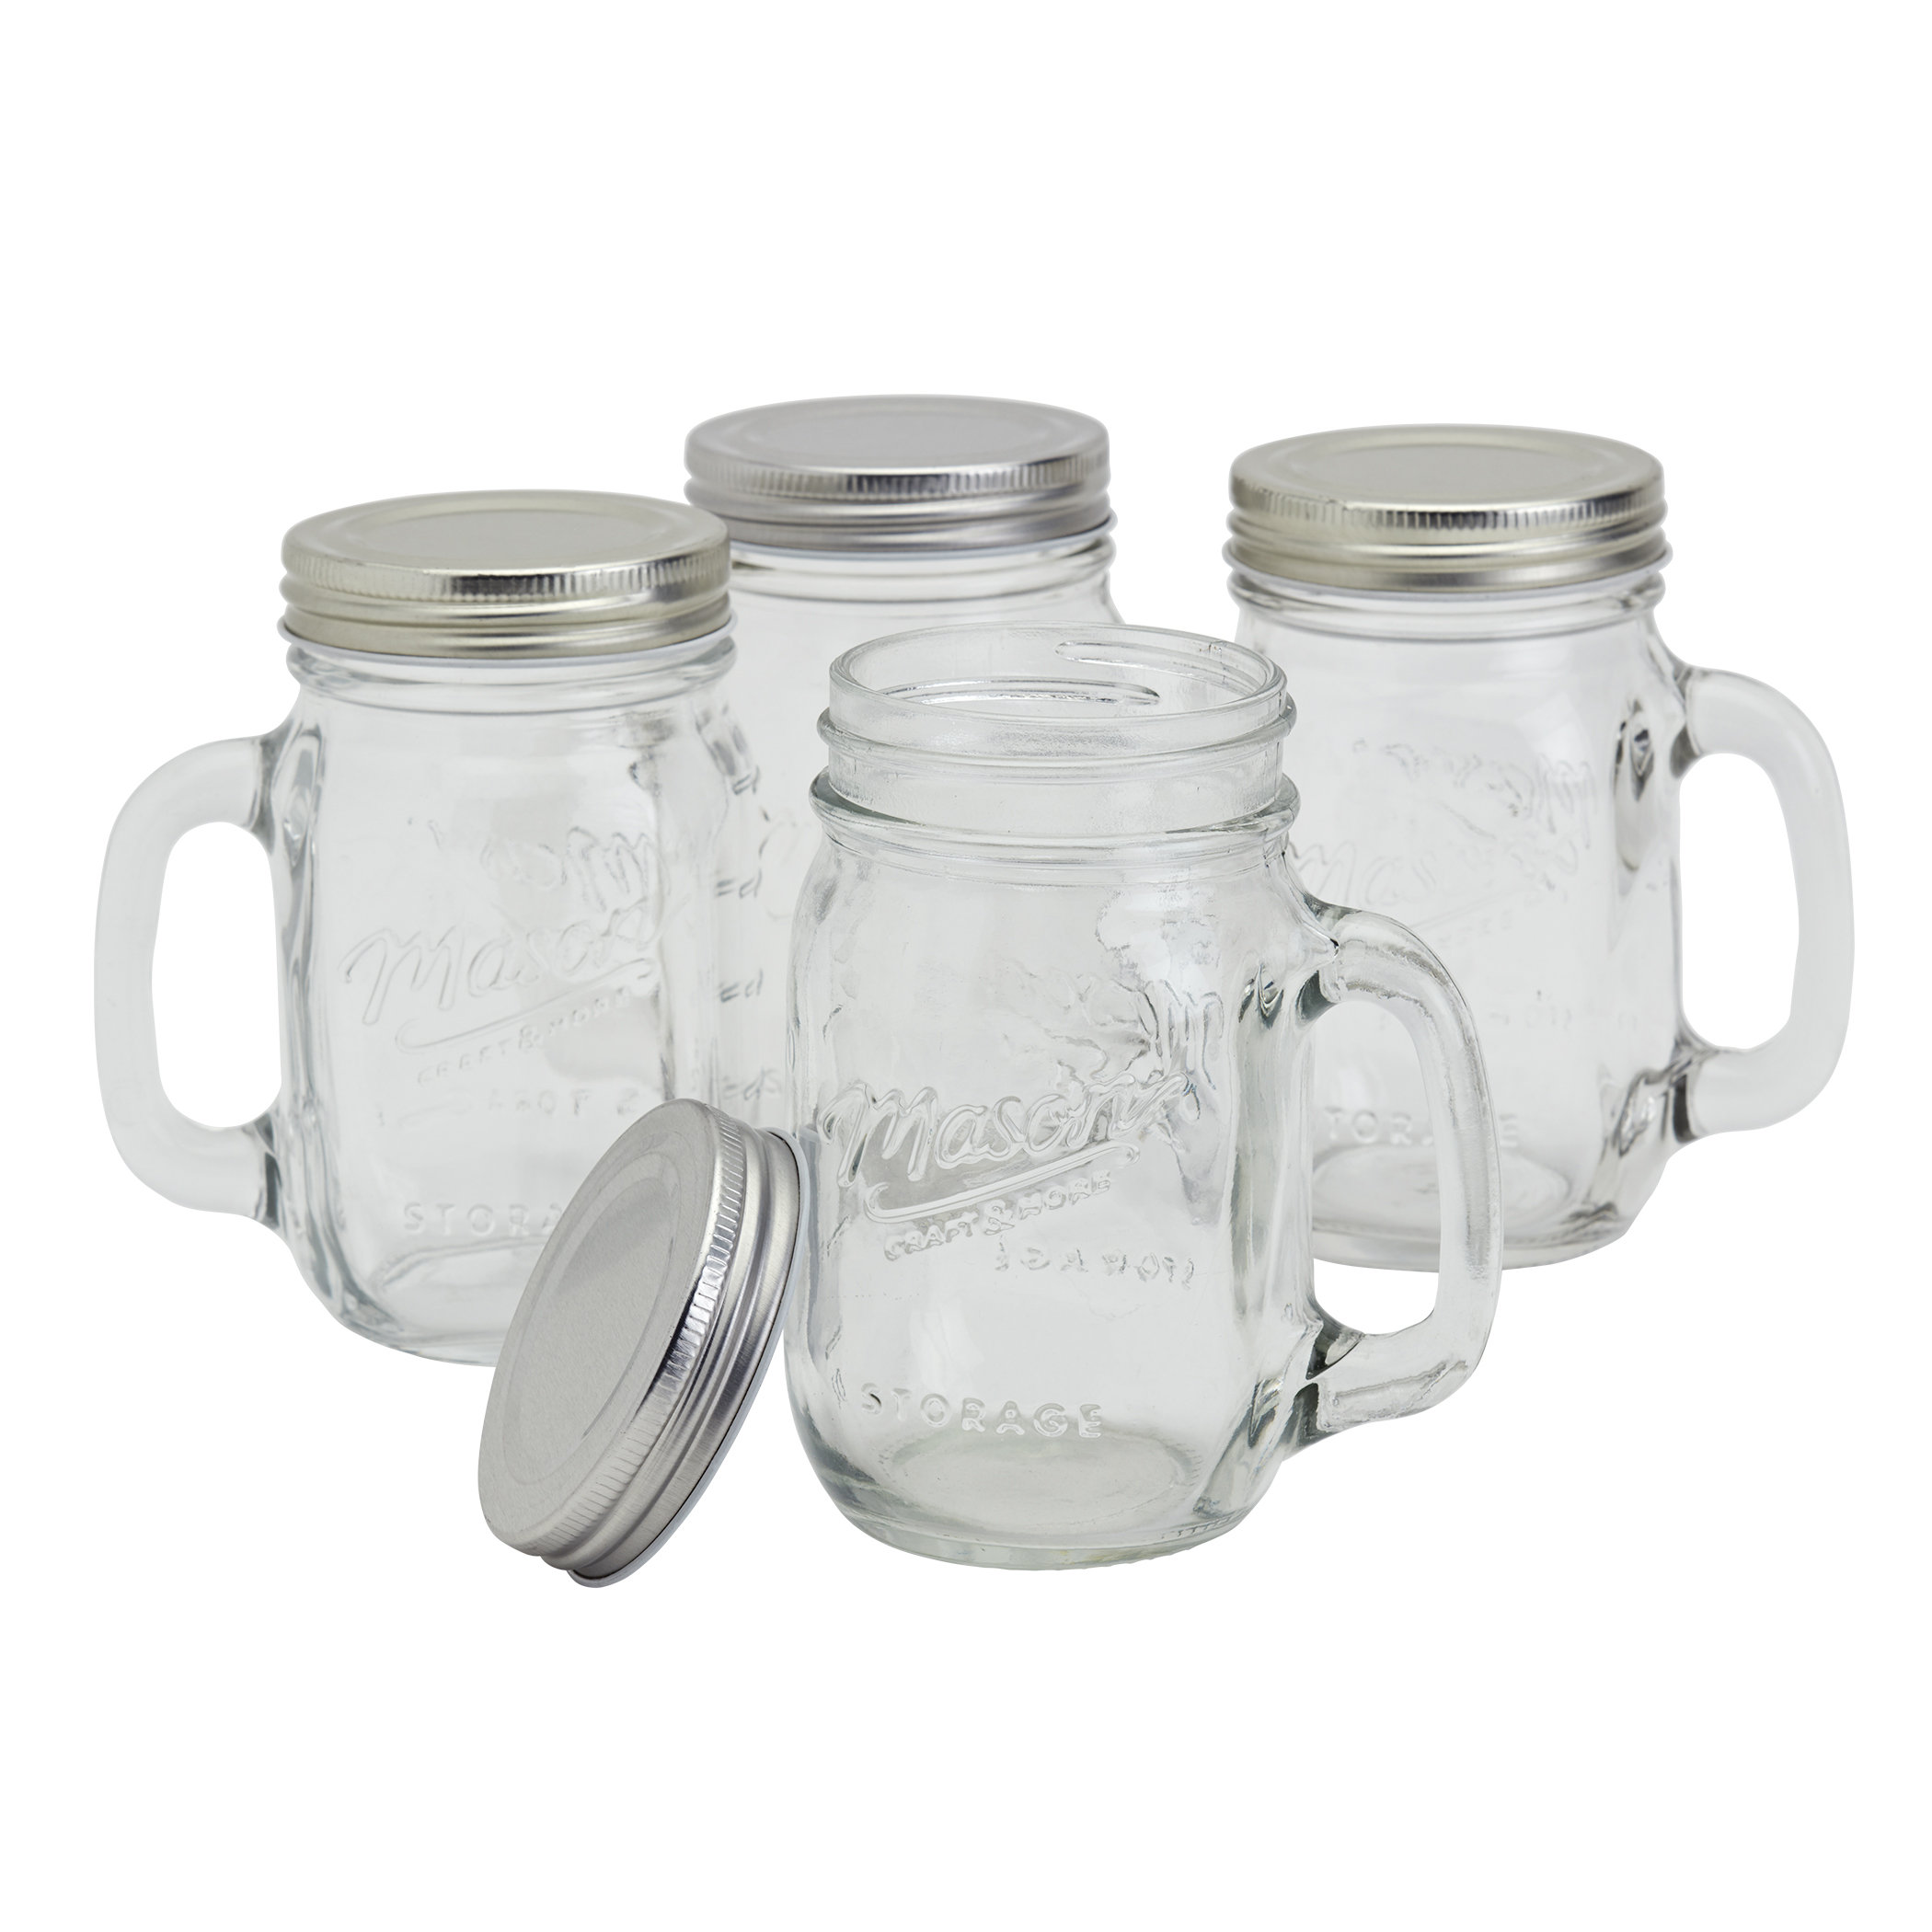 Vintage Mason Jar Mugs Glass Drinking Jars With Handles & Lids 16 oz Set of  6